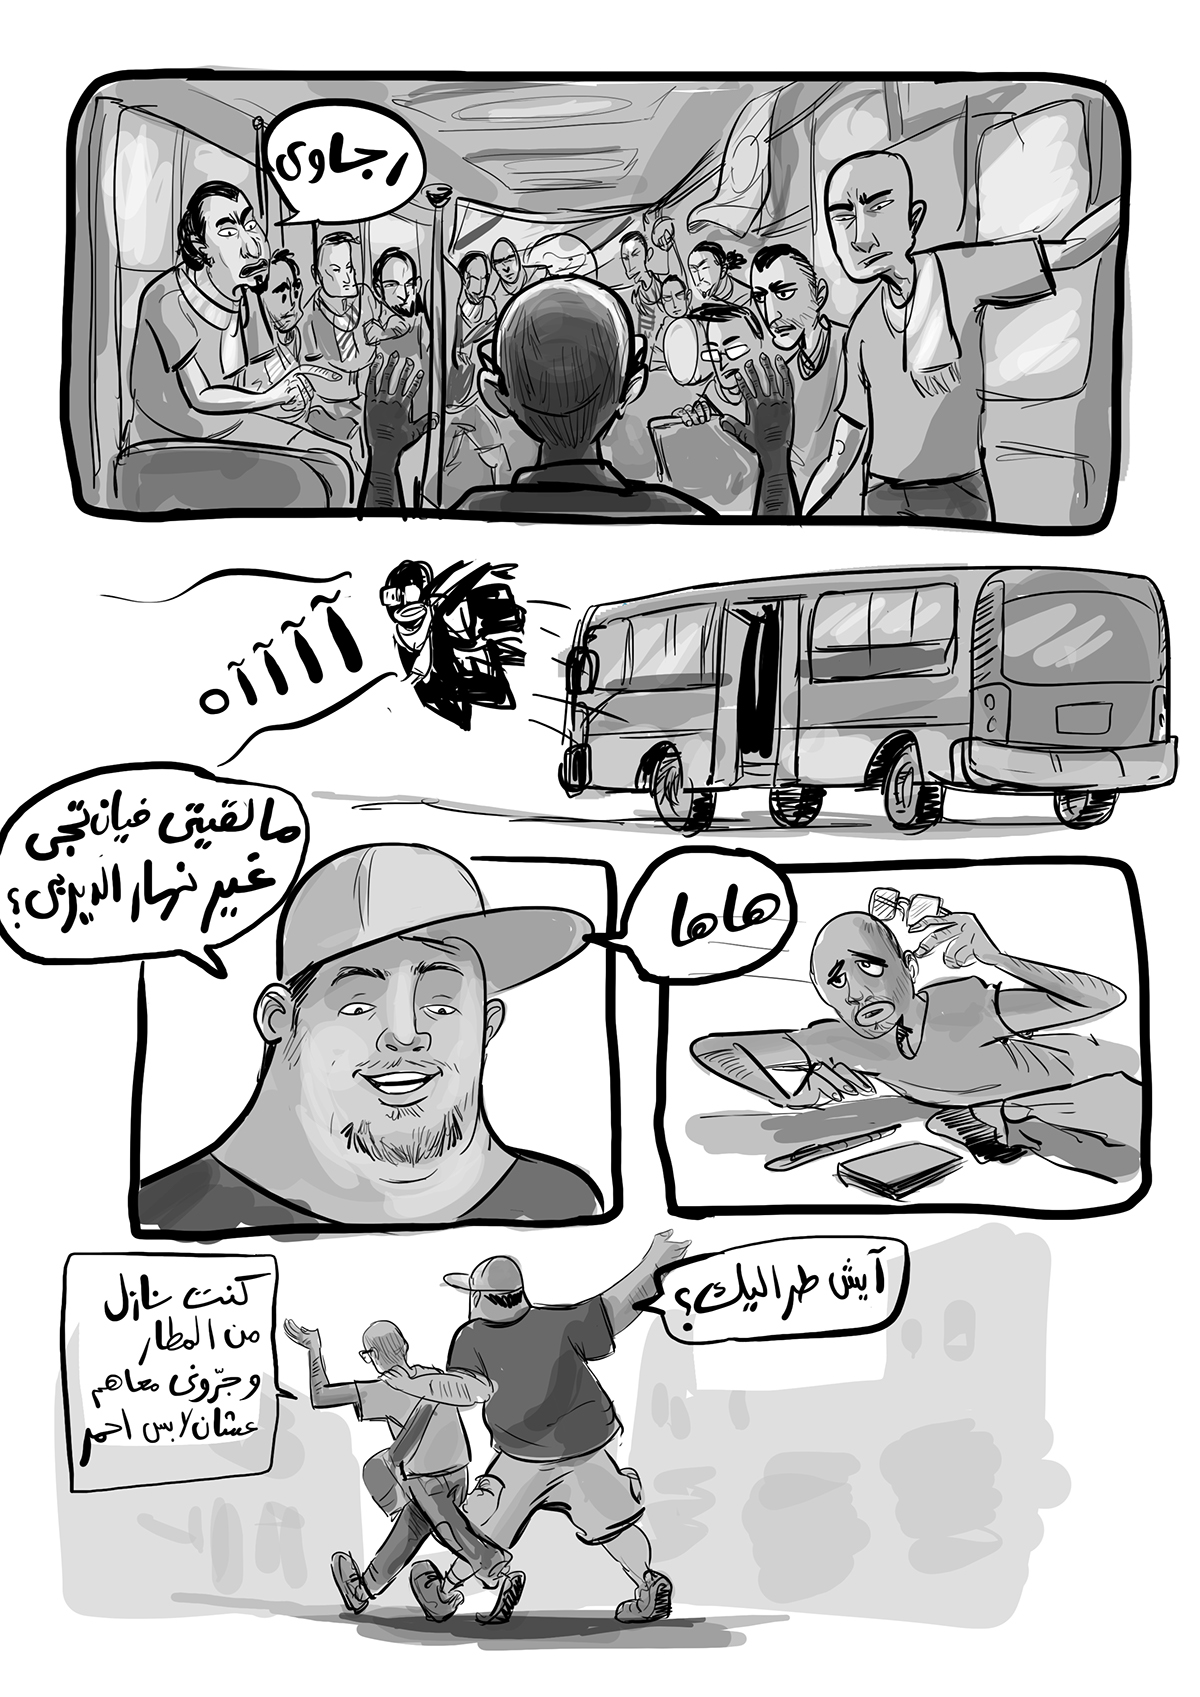 skefkef BD comics Morocco Casablanca black and white marocaine bw